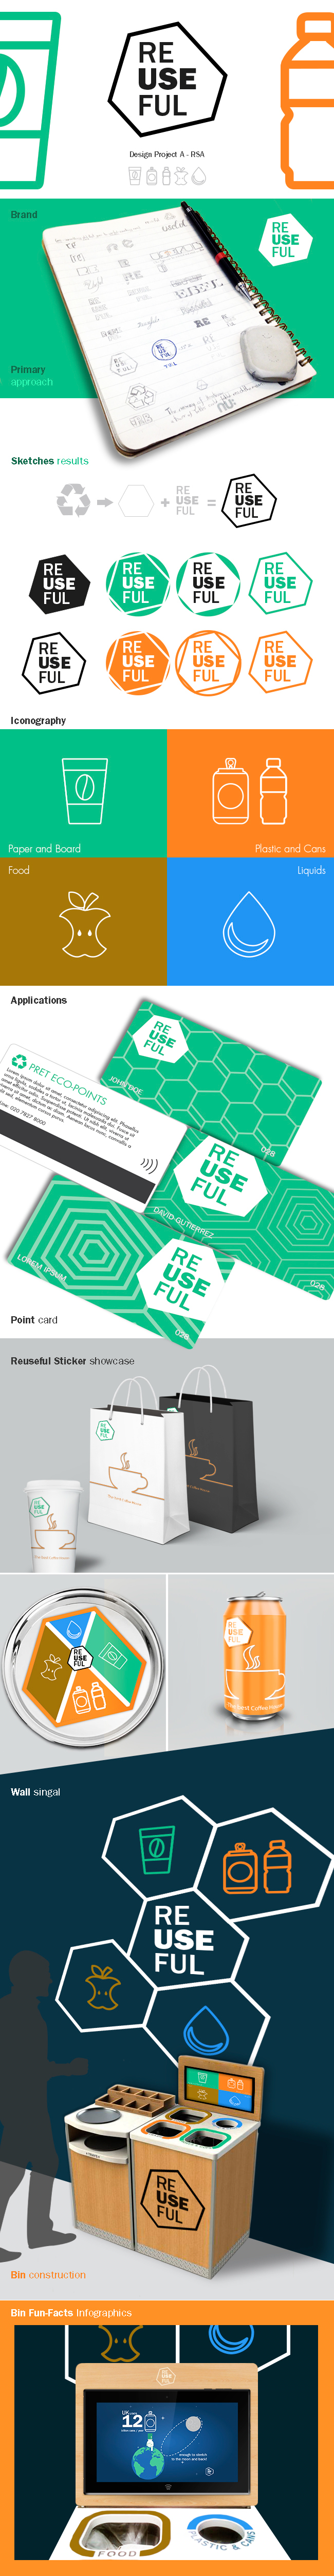 Rsa environmental brand Reuseful waste materials Ethics social responsibility photoshop Illustrator